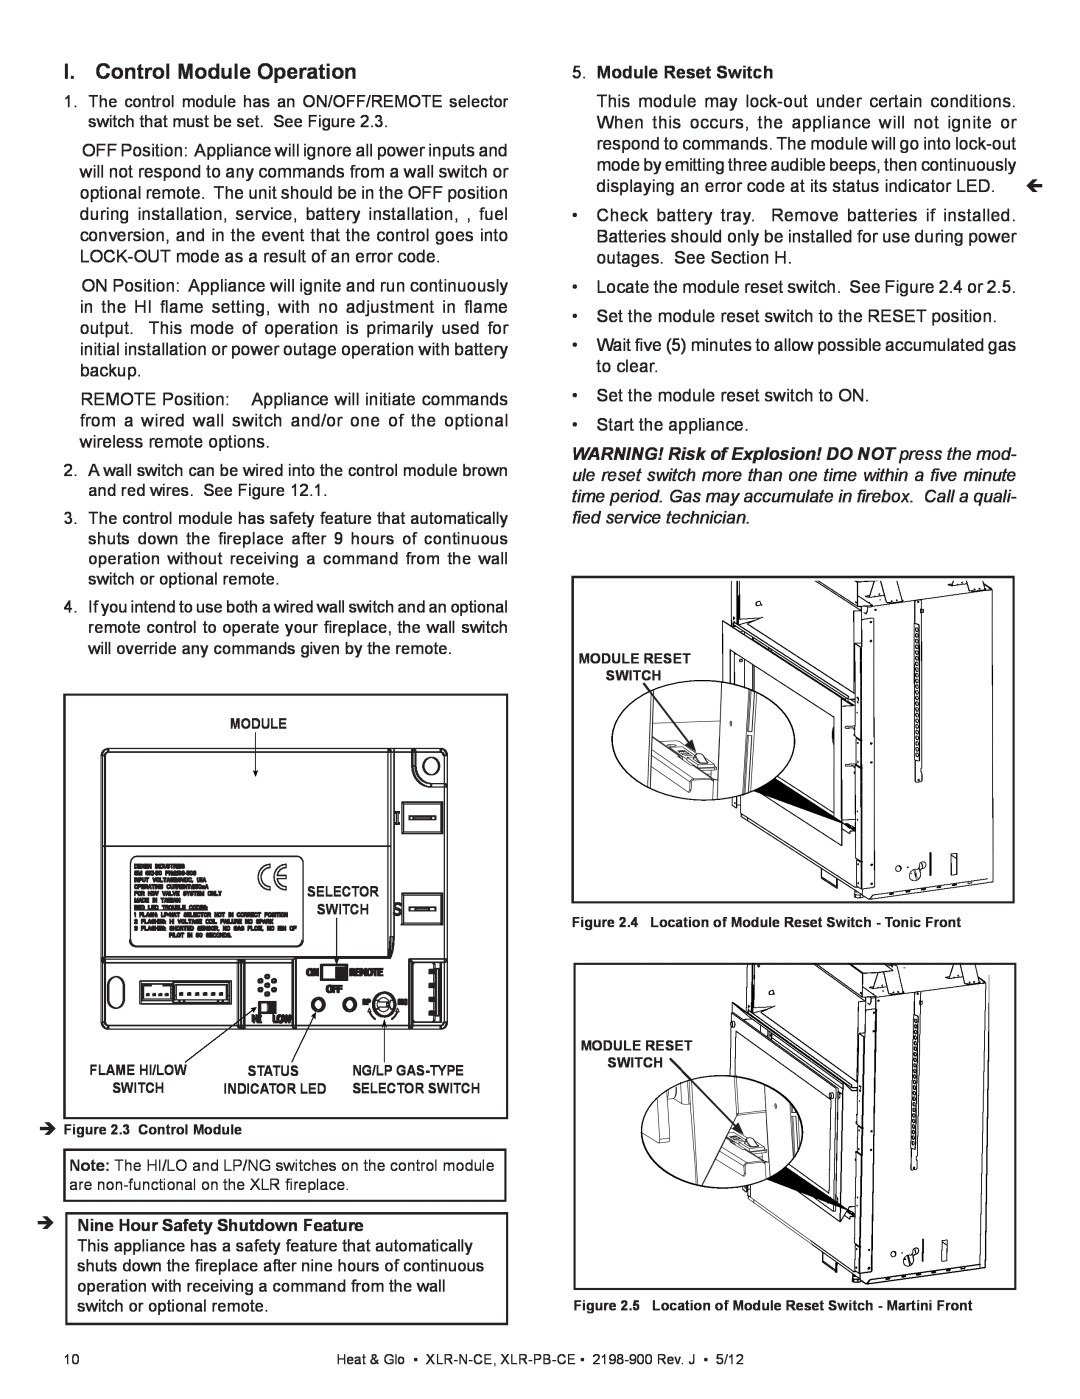 Heat & Glo LifeStyle XLR-N-CE manual I. Control Module Operation, Nine Hour Safety Shutdown Feature, Module Reset Switch 